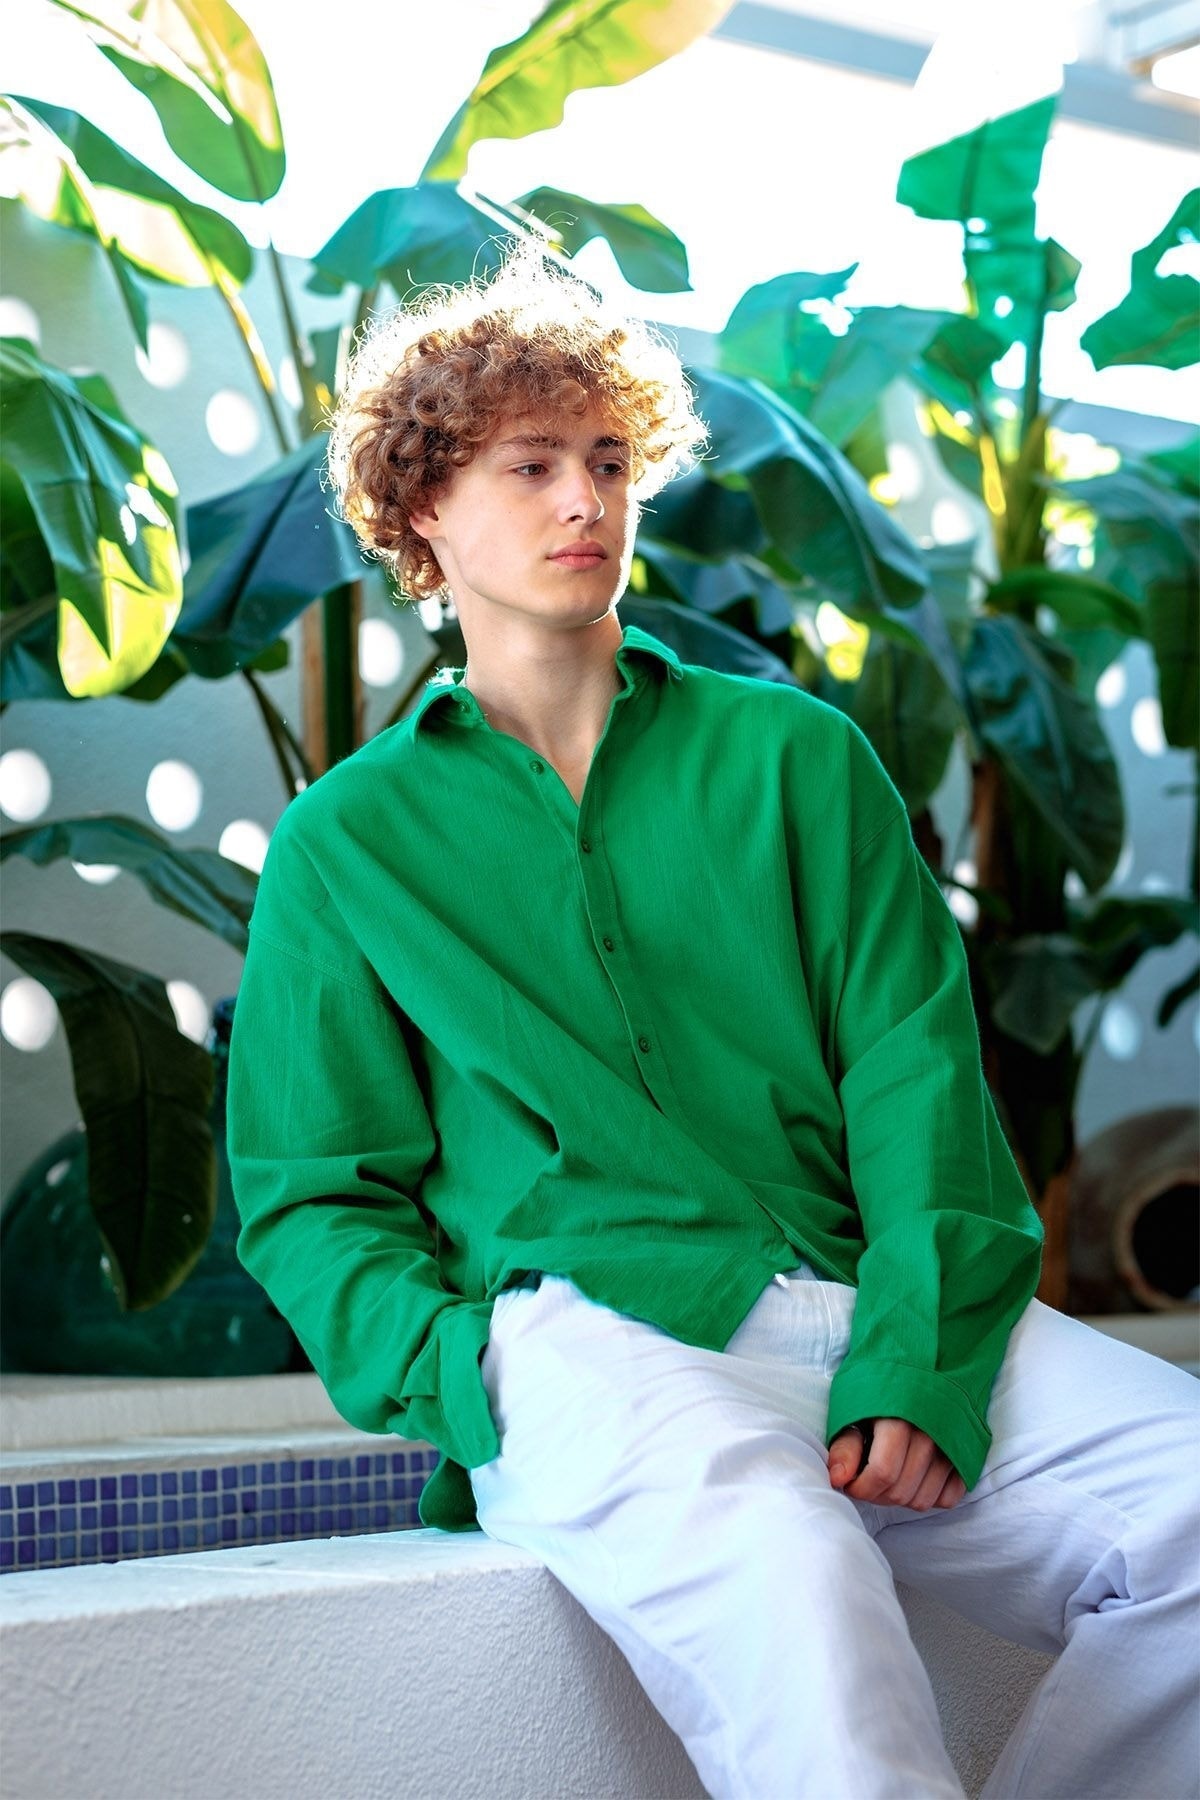 XHAN Benetton Green Crinkle Fabric Shirt 3hxe2-46973-08